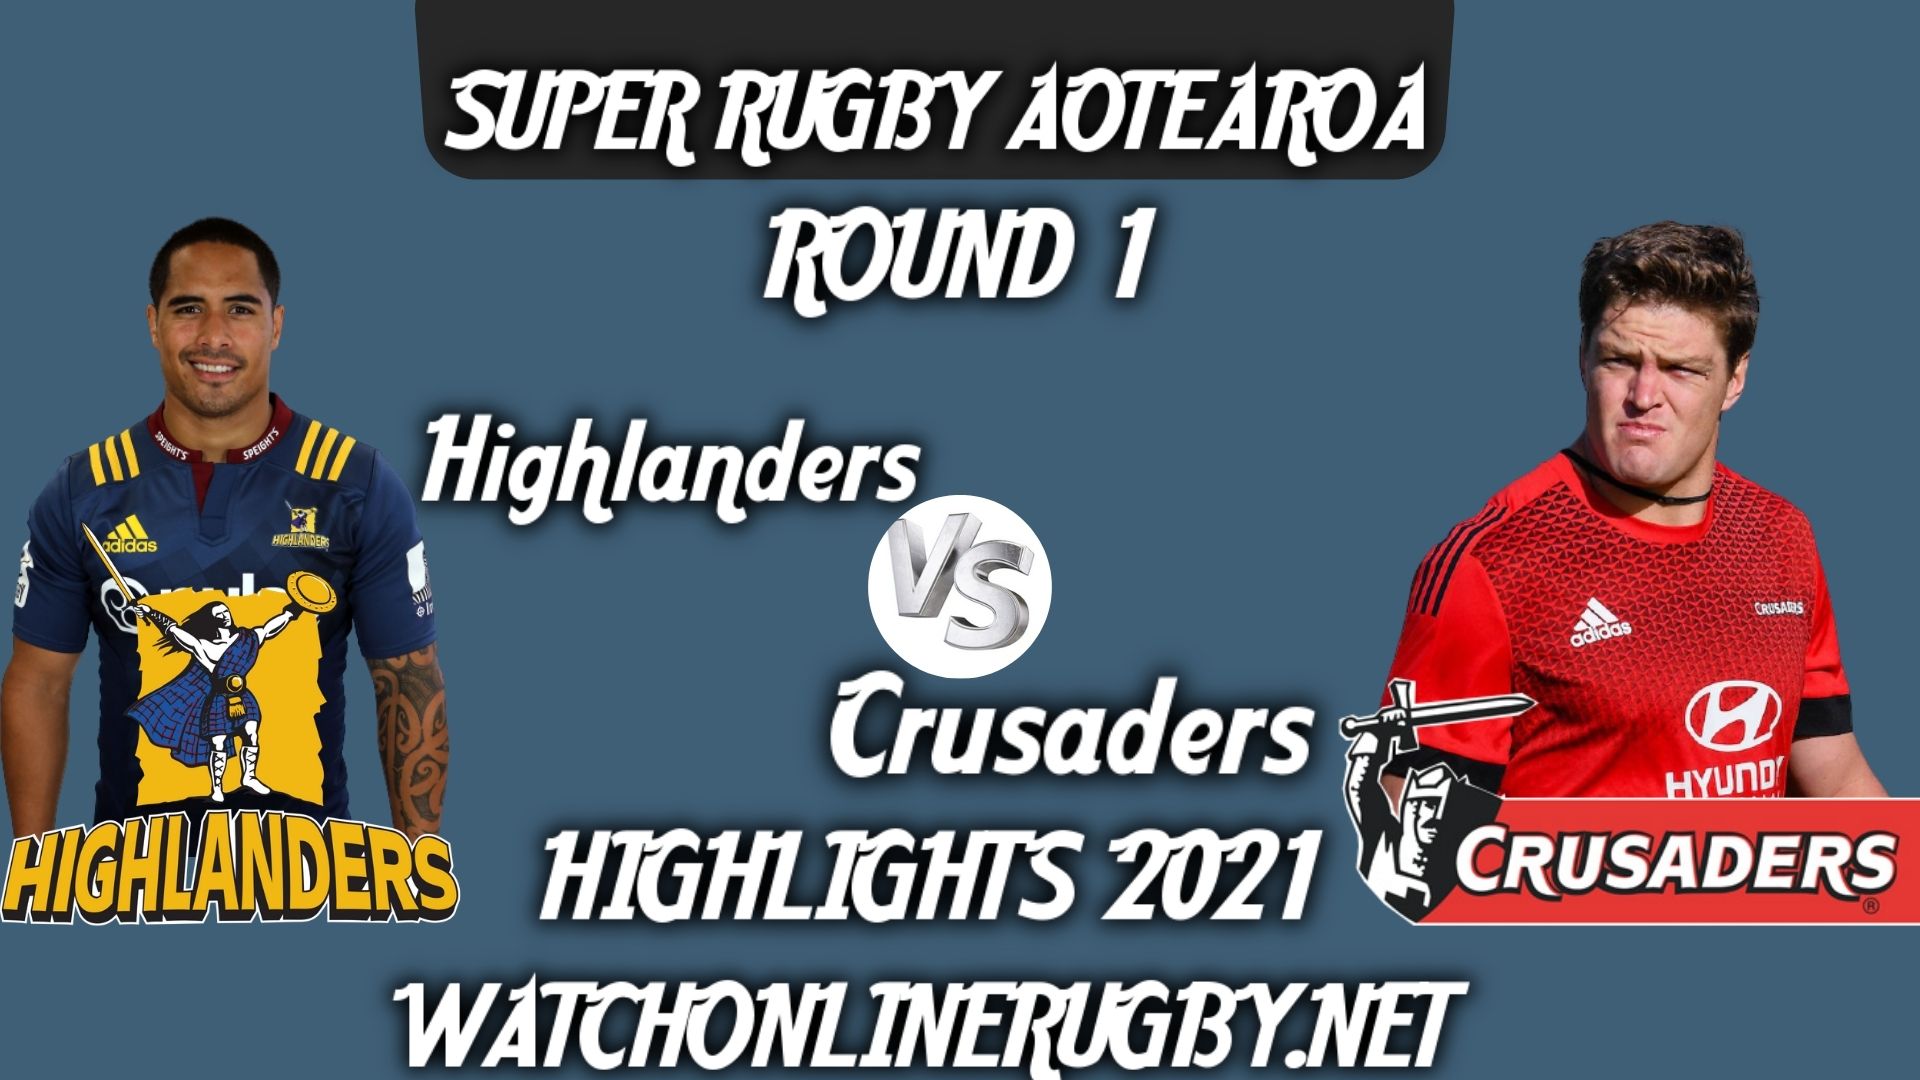 Highlanders Vs Crusaders Super Rugby Aotearoa 2021 RD 1